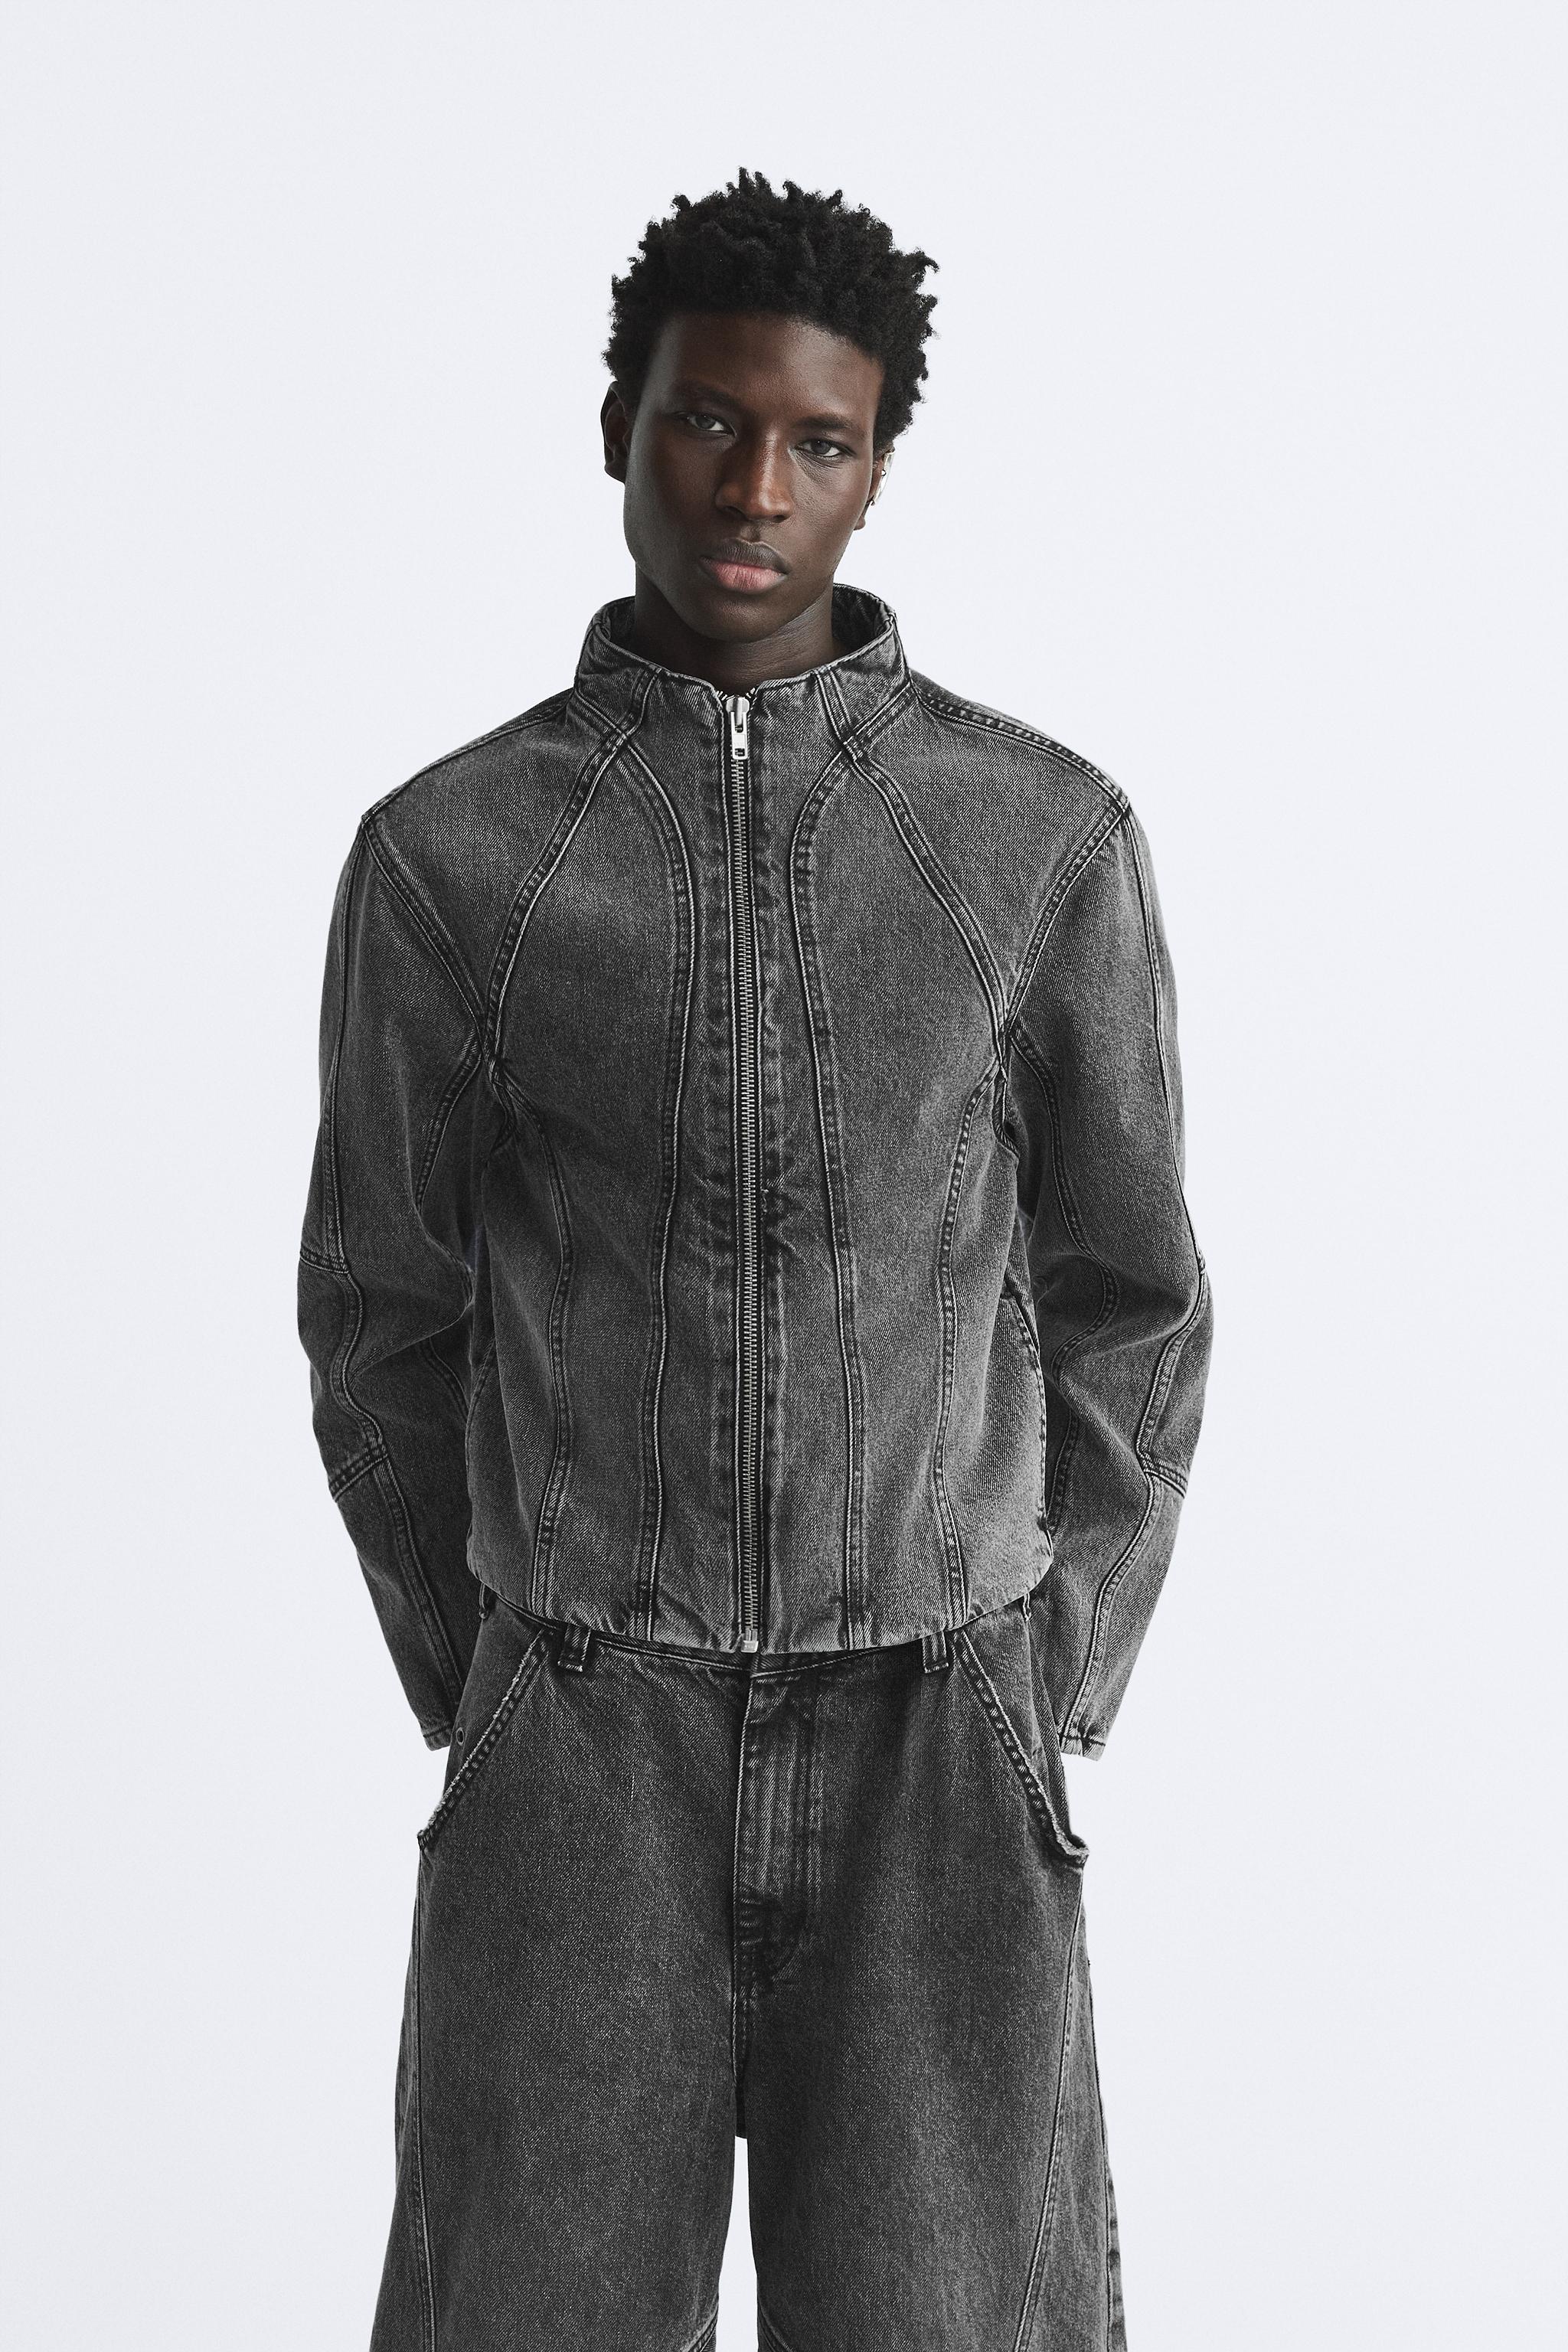 Zara Geometric Jacquard Denim Jacket - M, L 🔖: N120,000 📍HOW TO